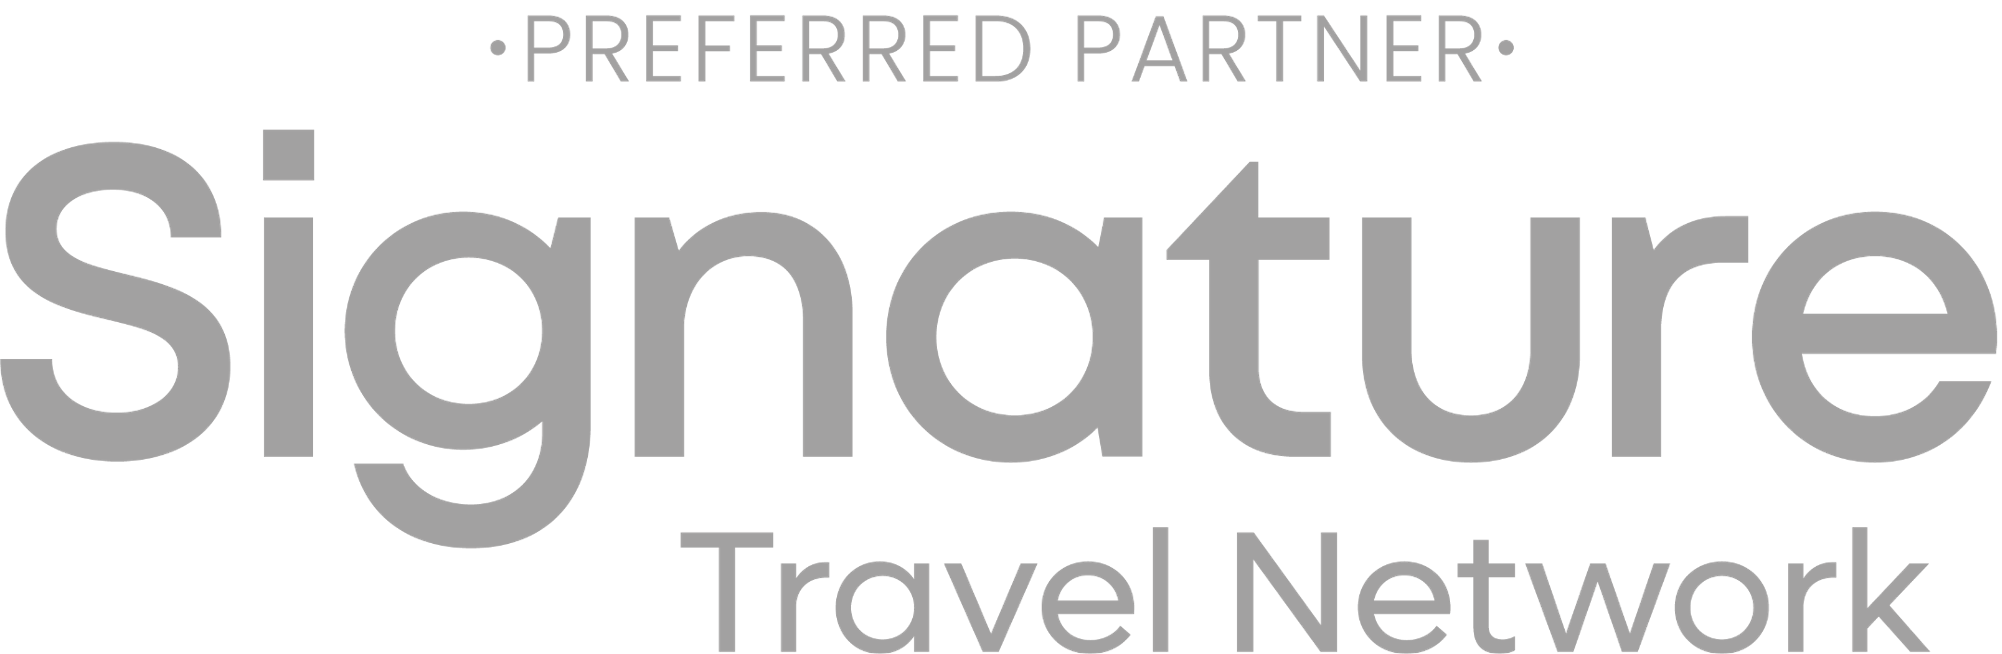 Signature Travel preferred partner logo Southern Crossings